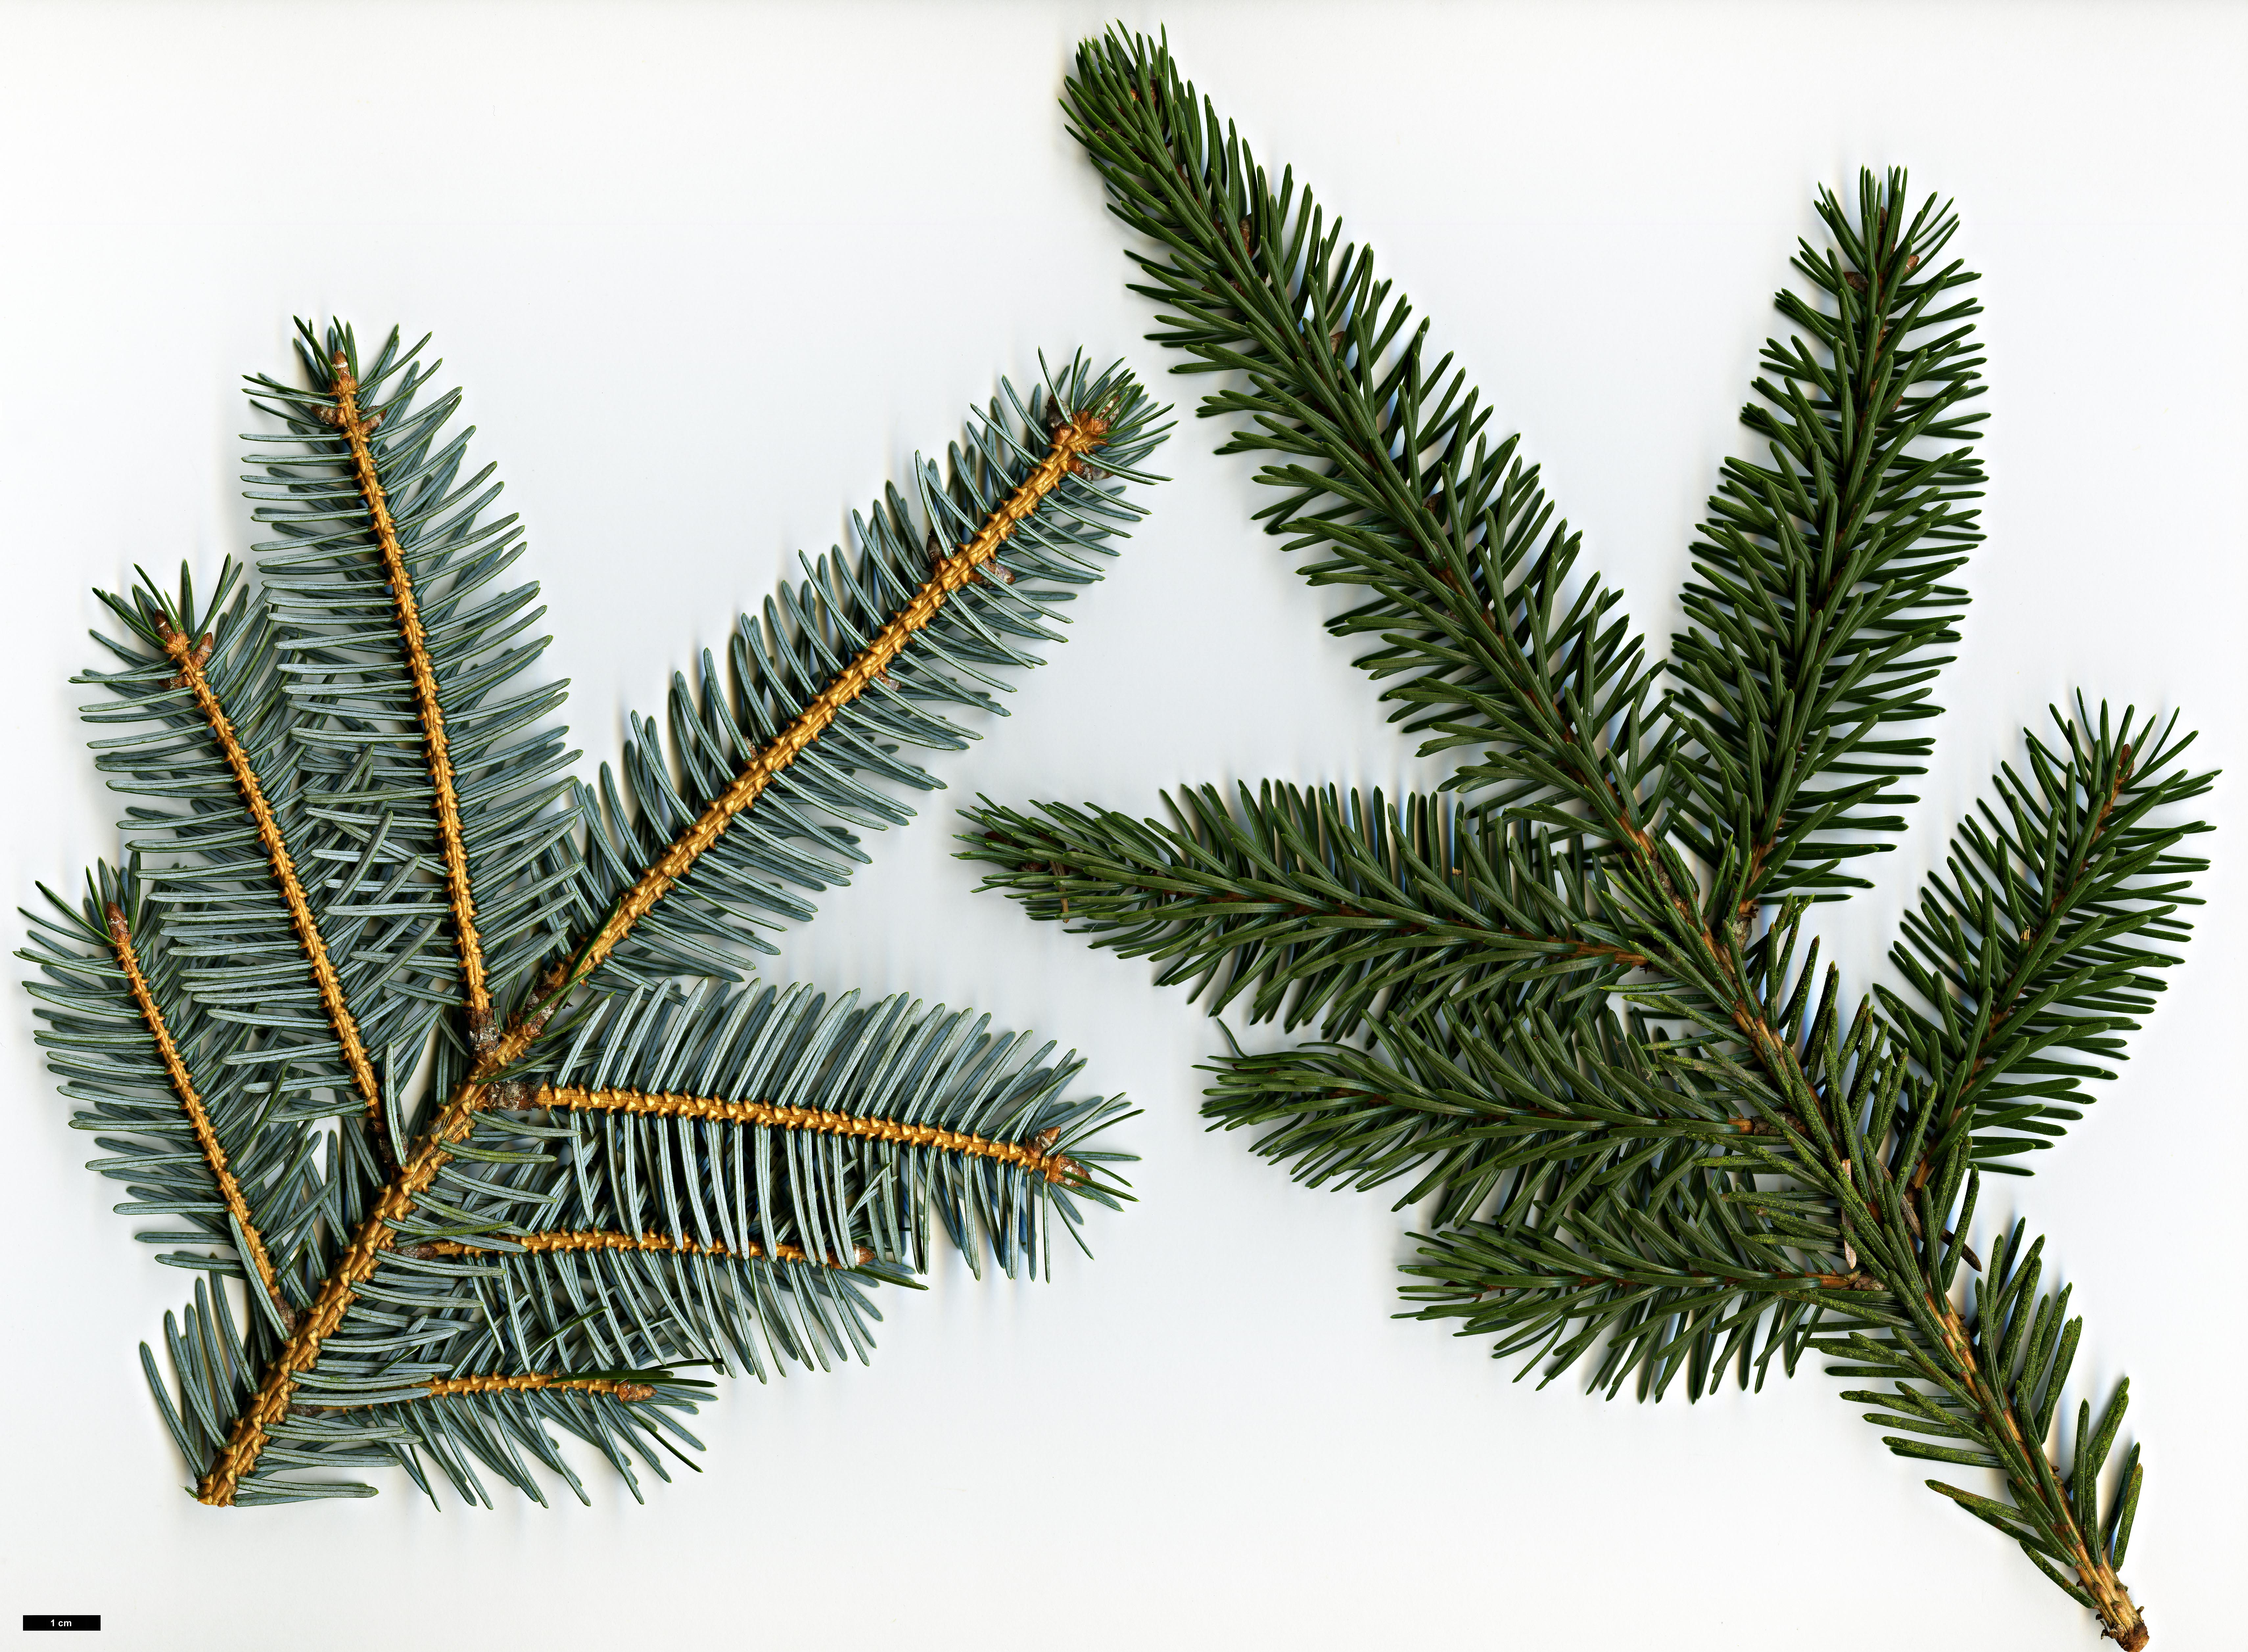 High resolution image: Family: Pinaceae - Genus: Picea - Taxon: jezoensis - SpeciesSub: subsp. hondoensis